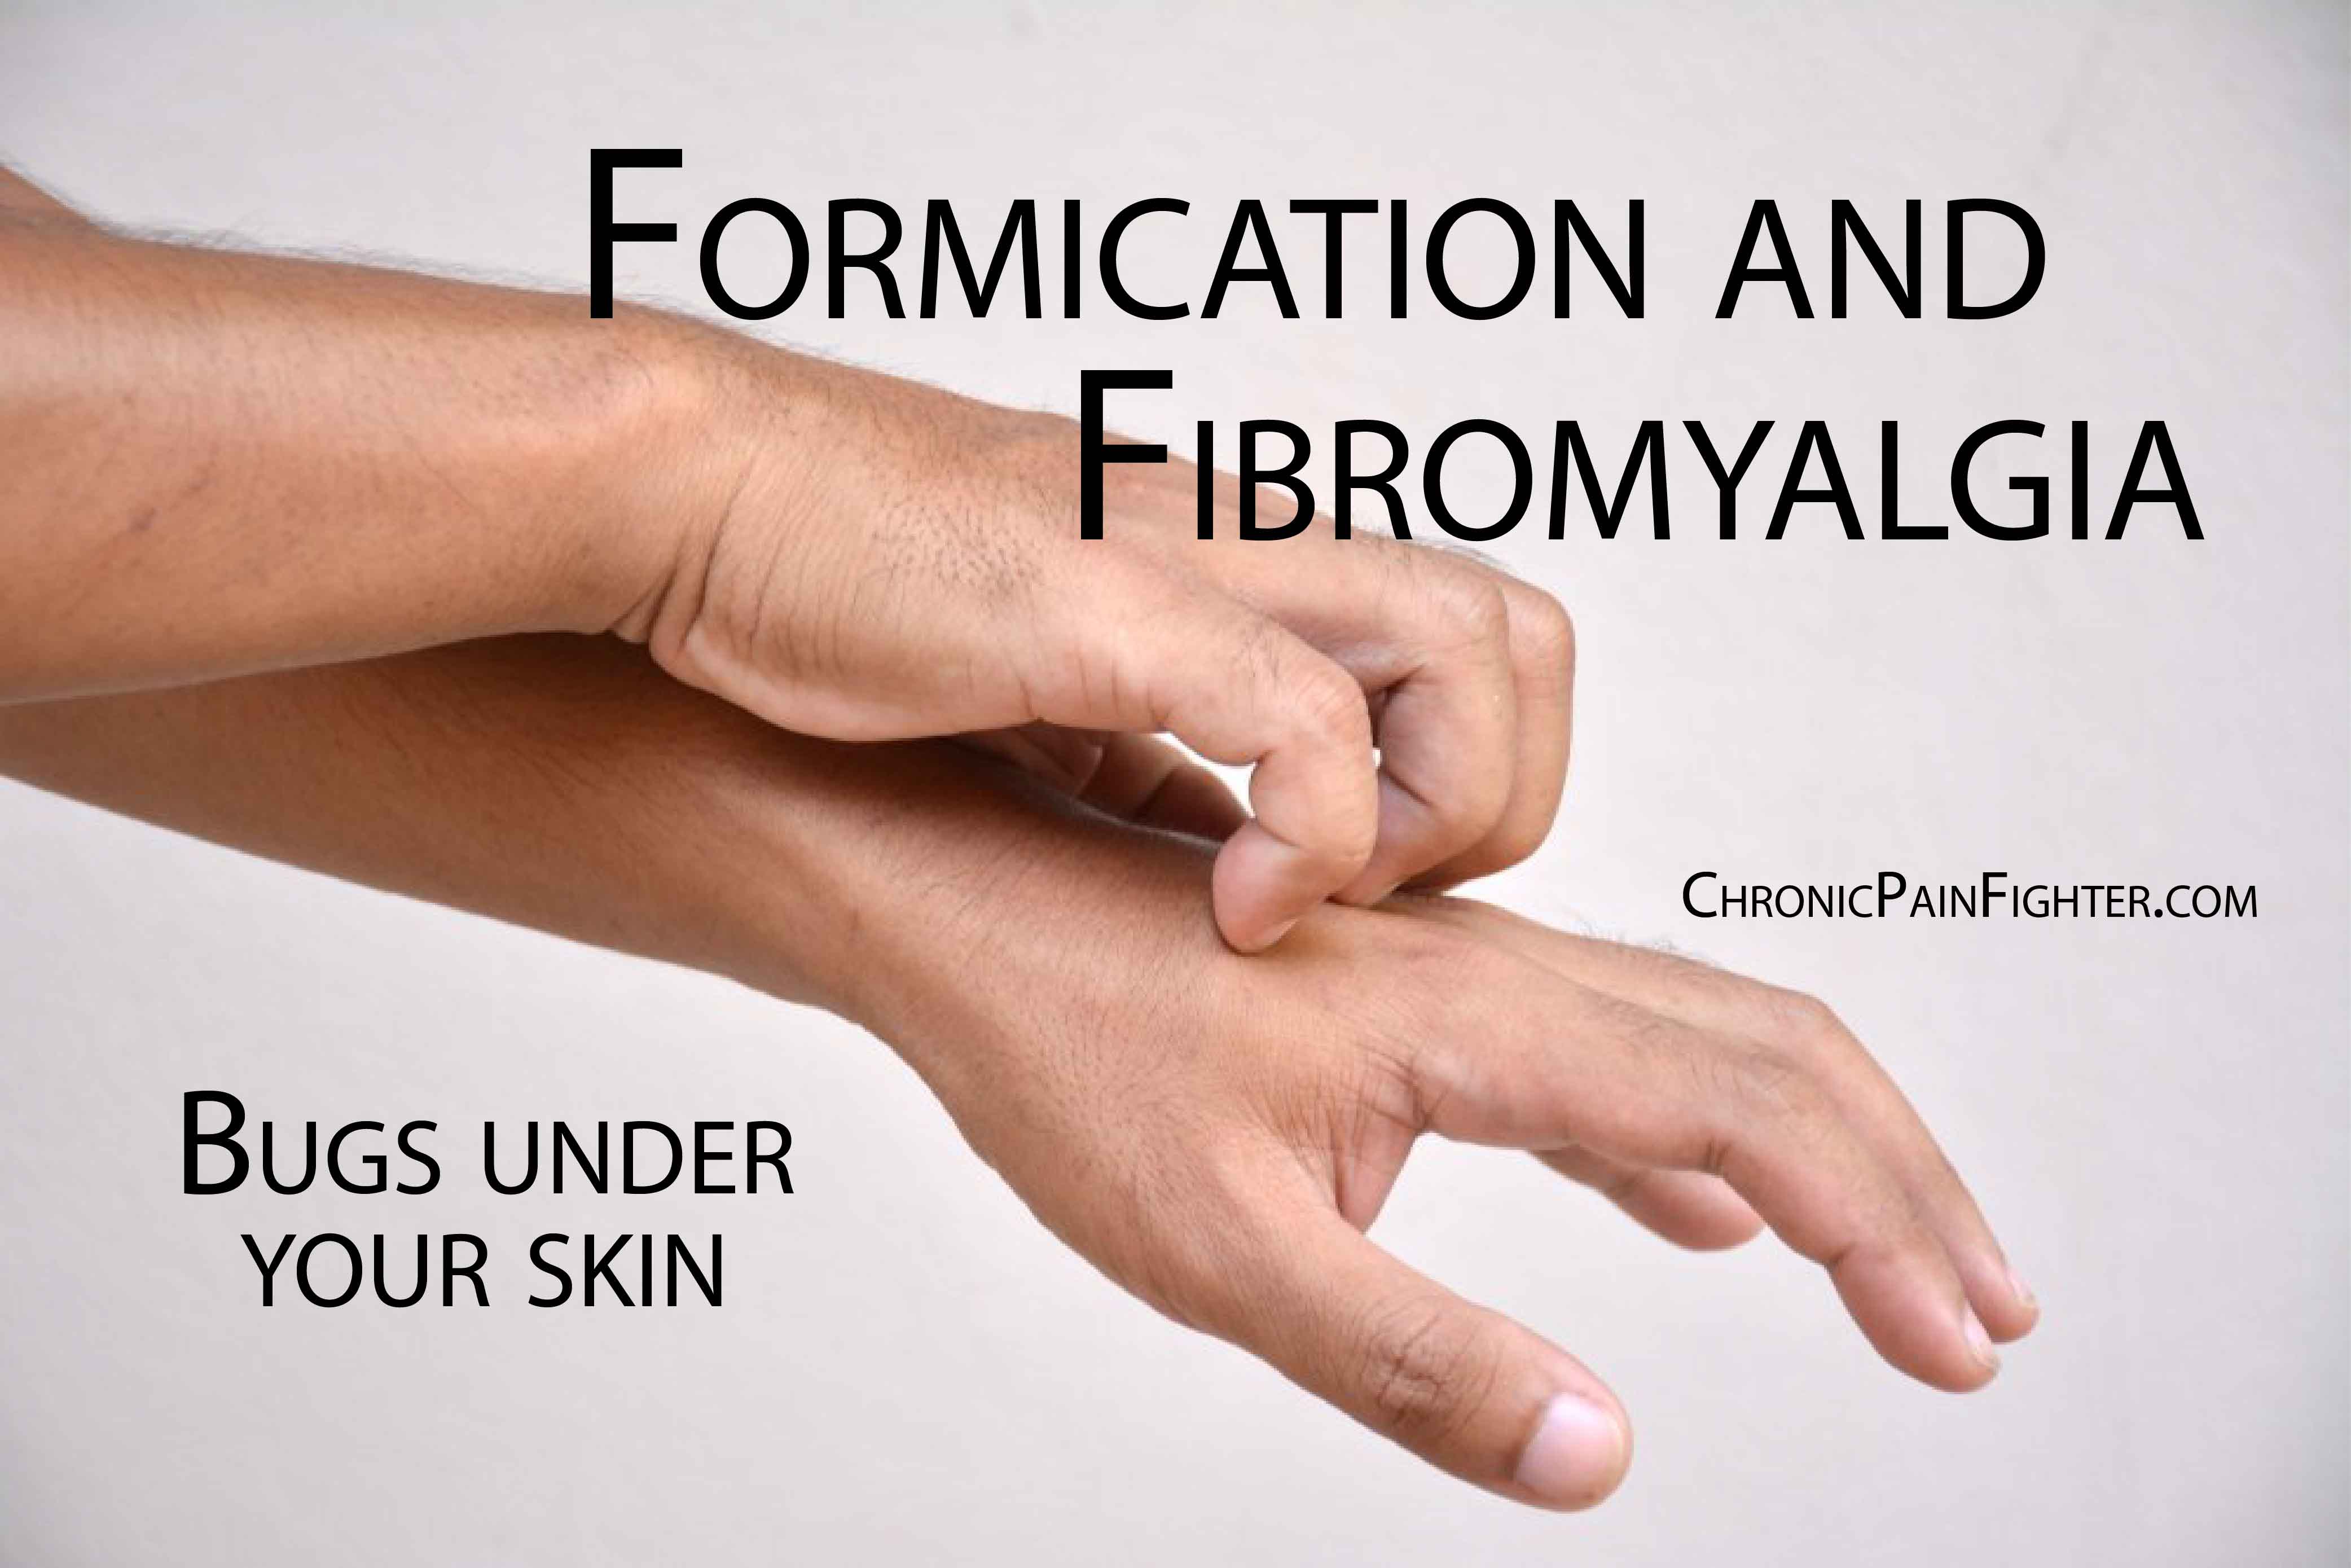 Formication and Fibromyalgia